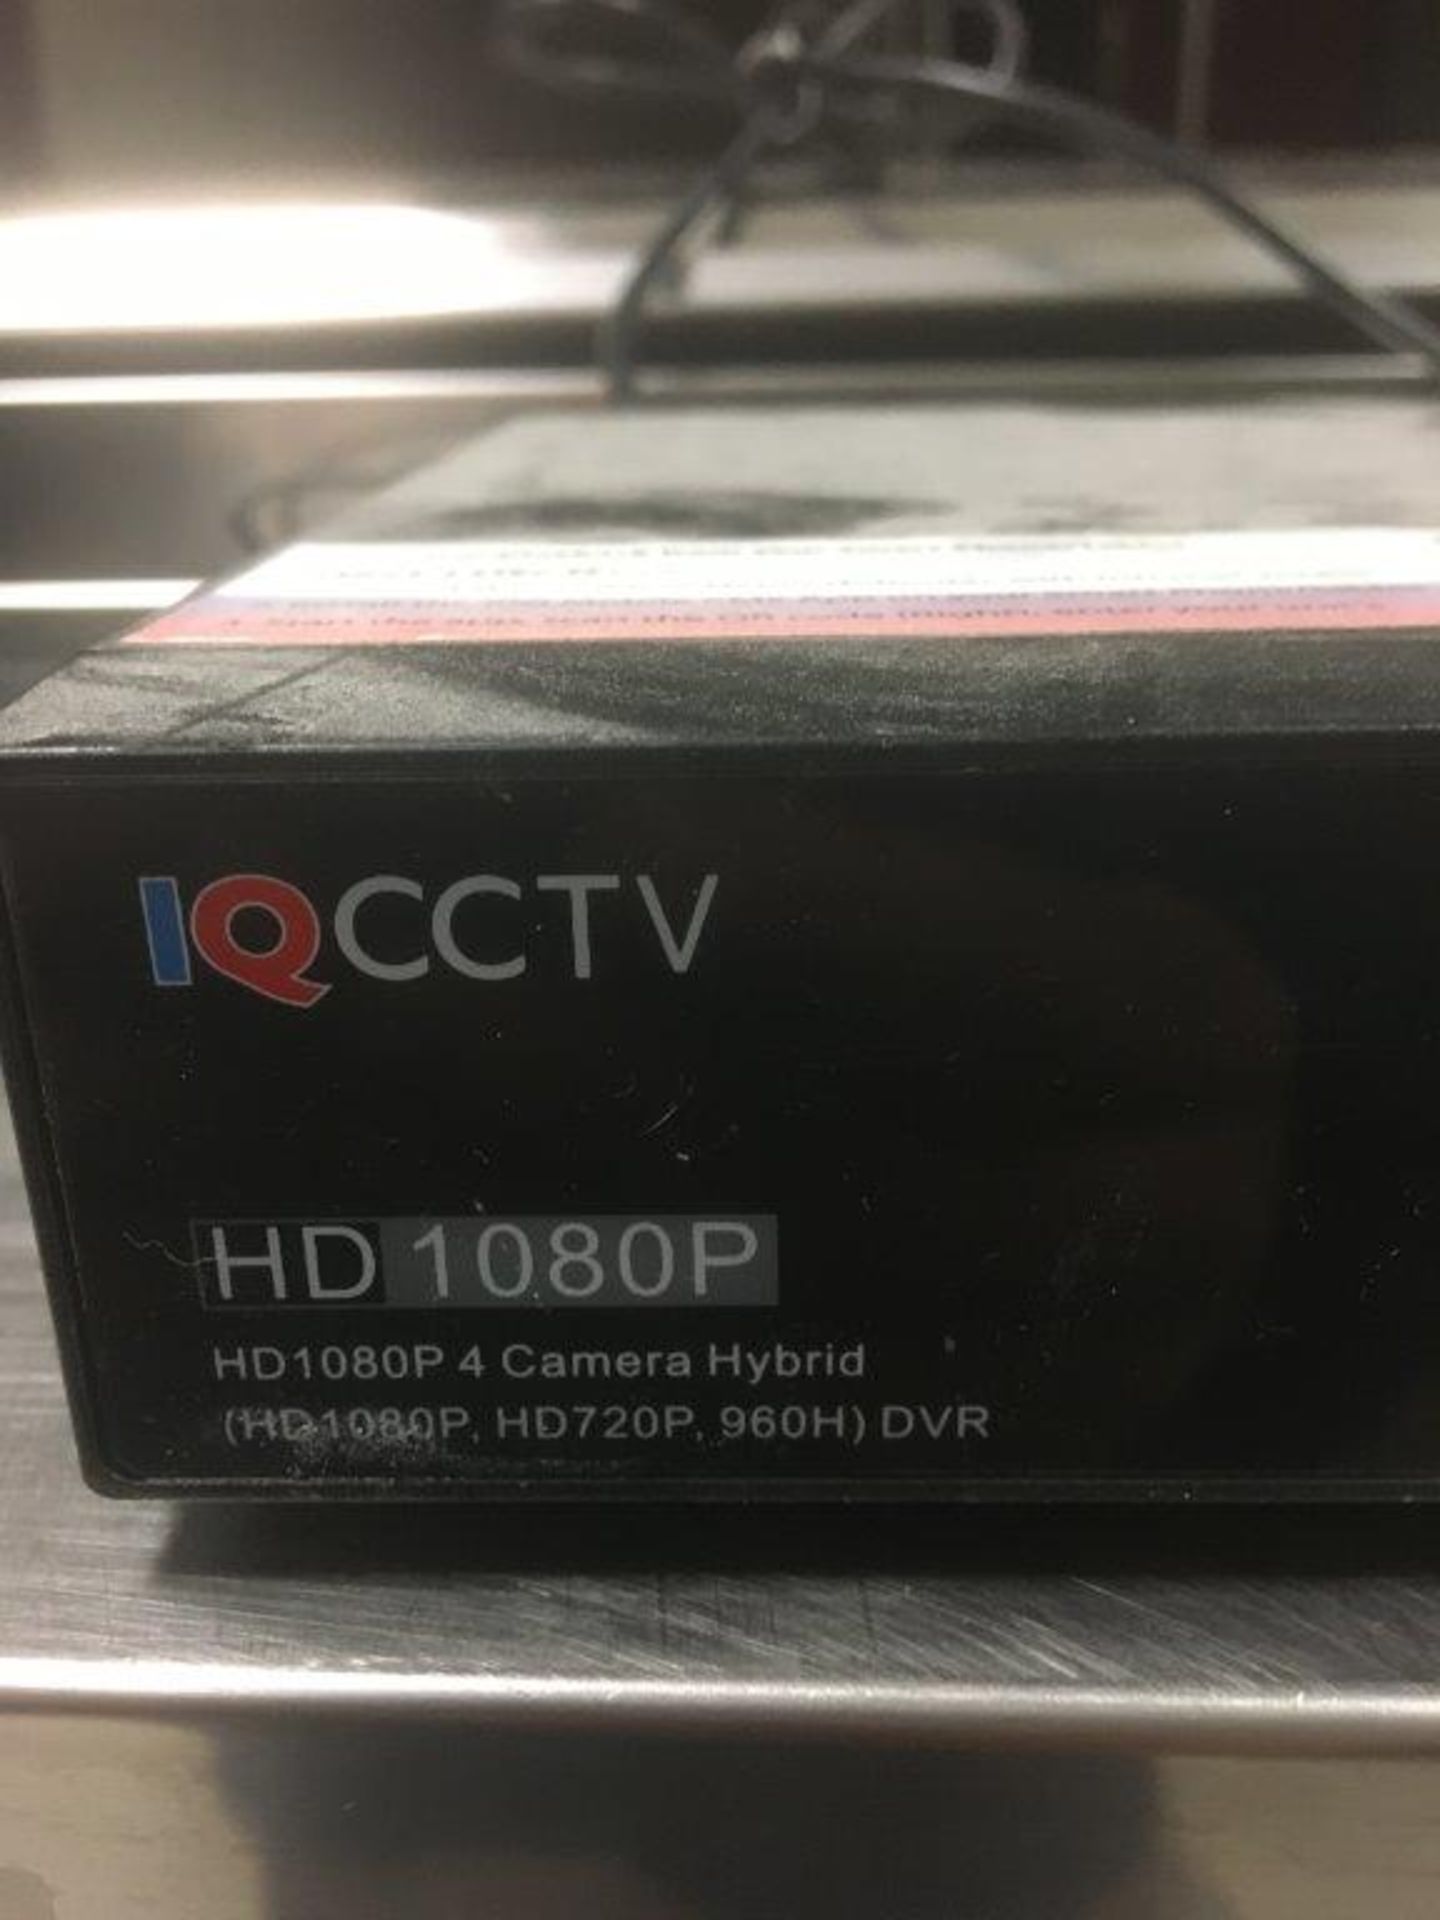 IQ CCTV 4 camera recorder, Model HD1080P - Image 2 of 3